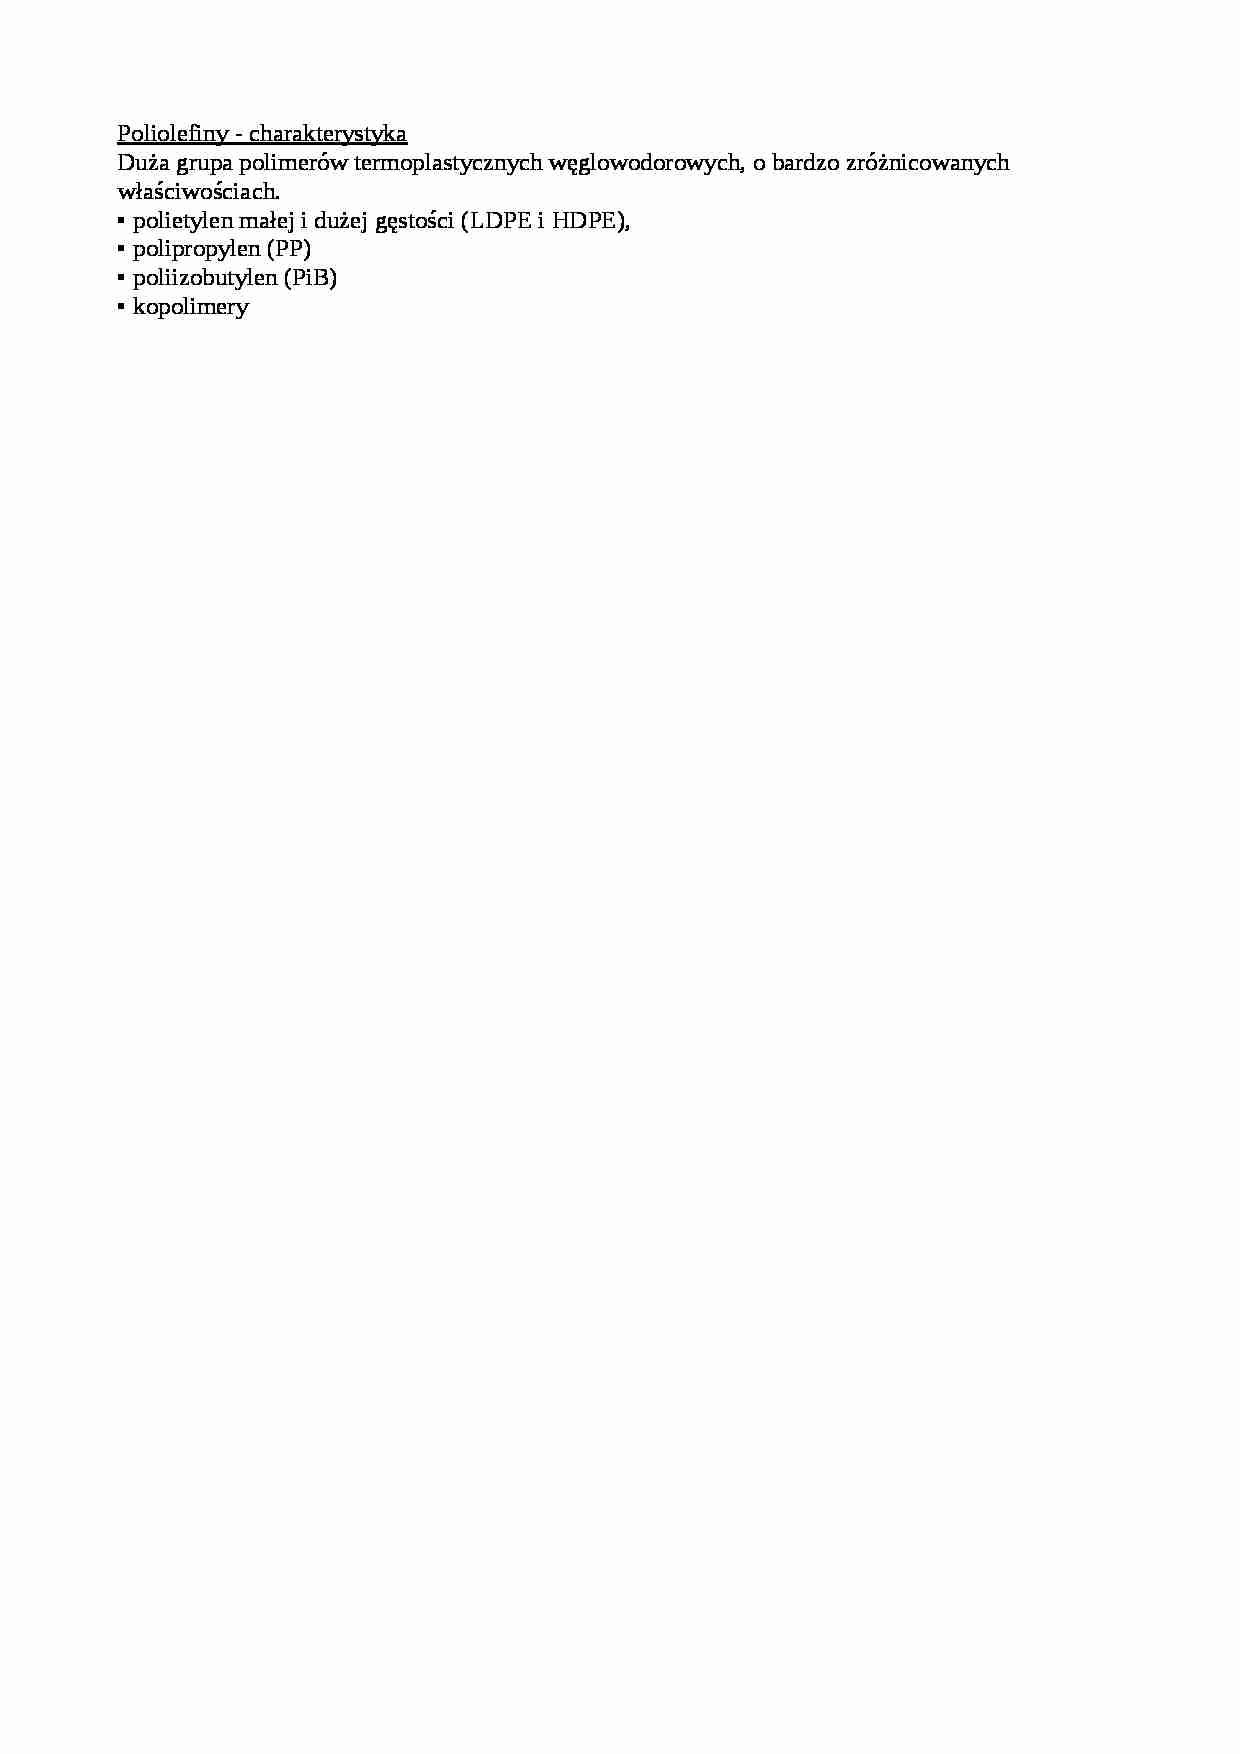 Poliolefiny - charakterystyka - strona 1